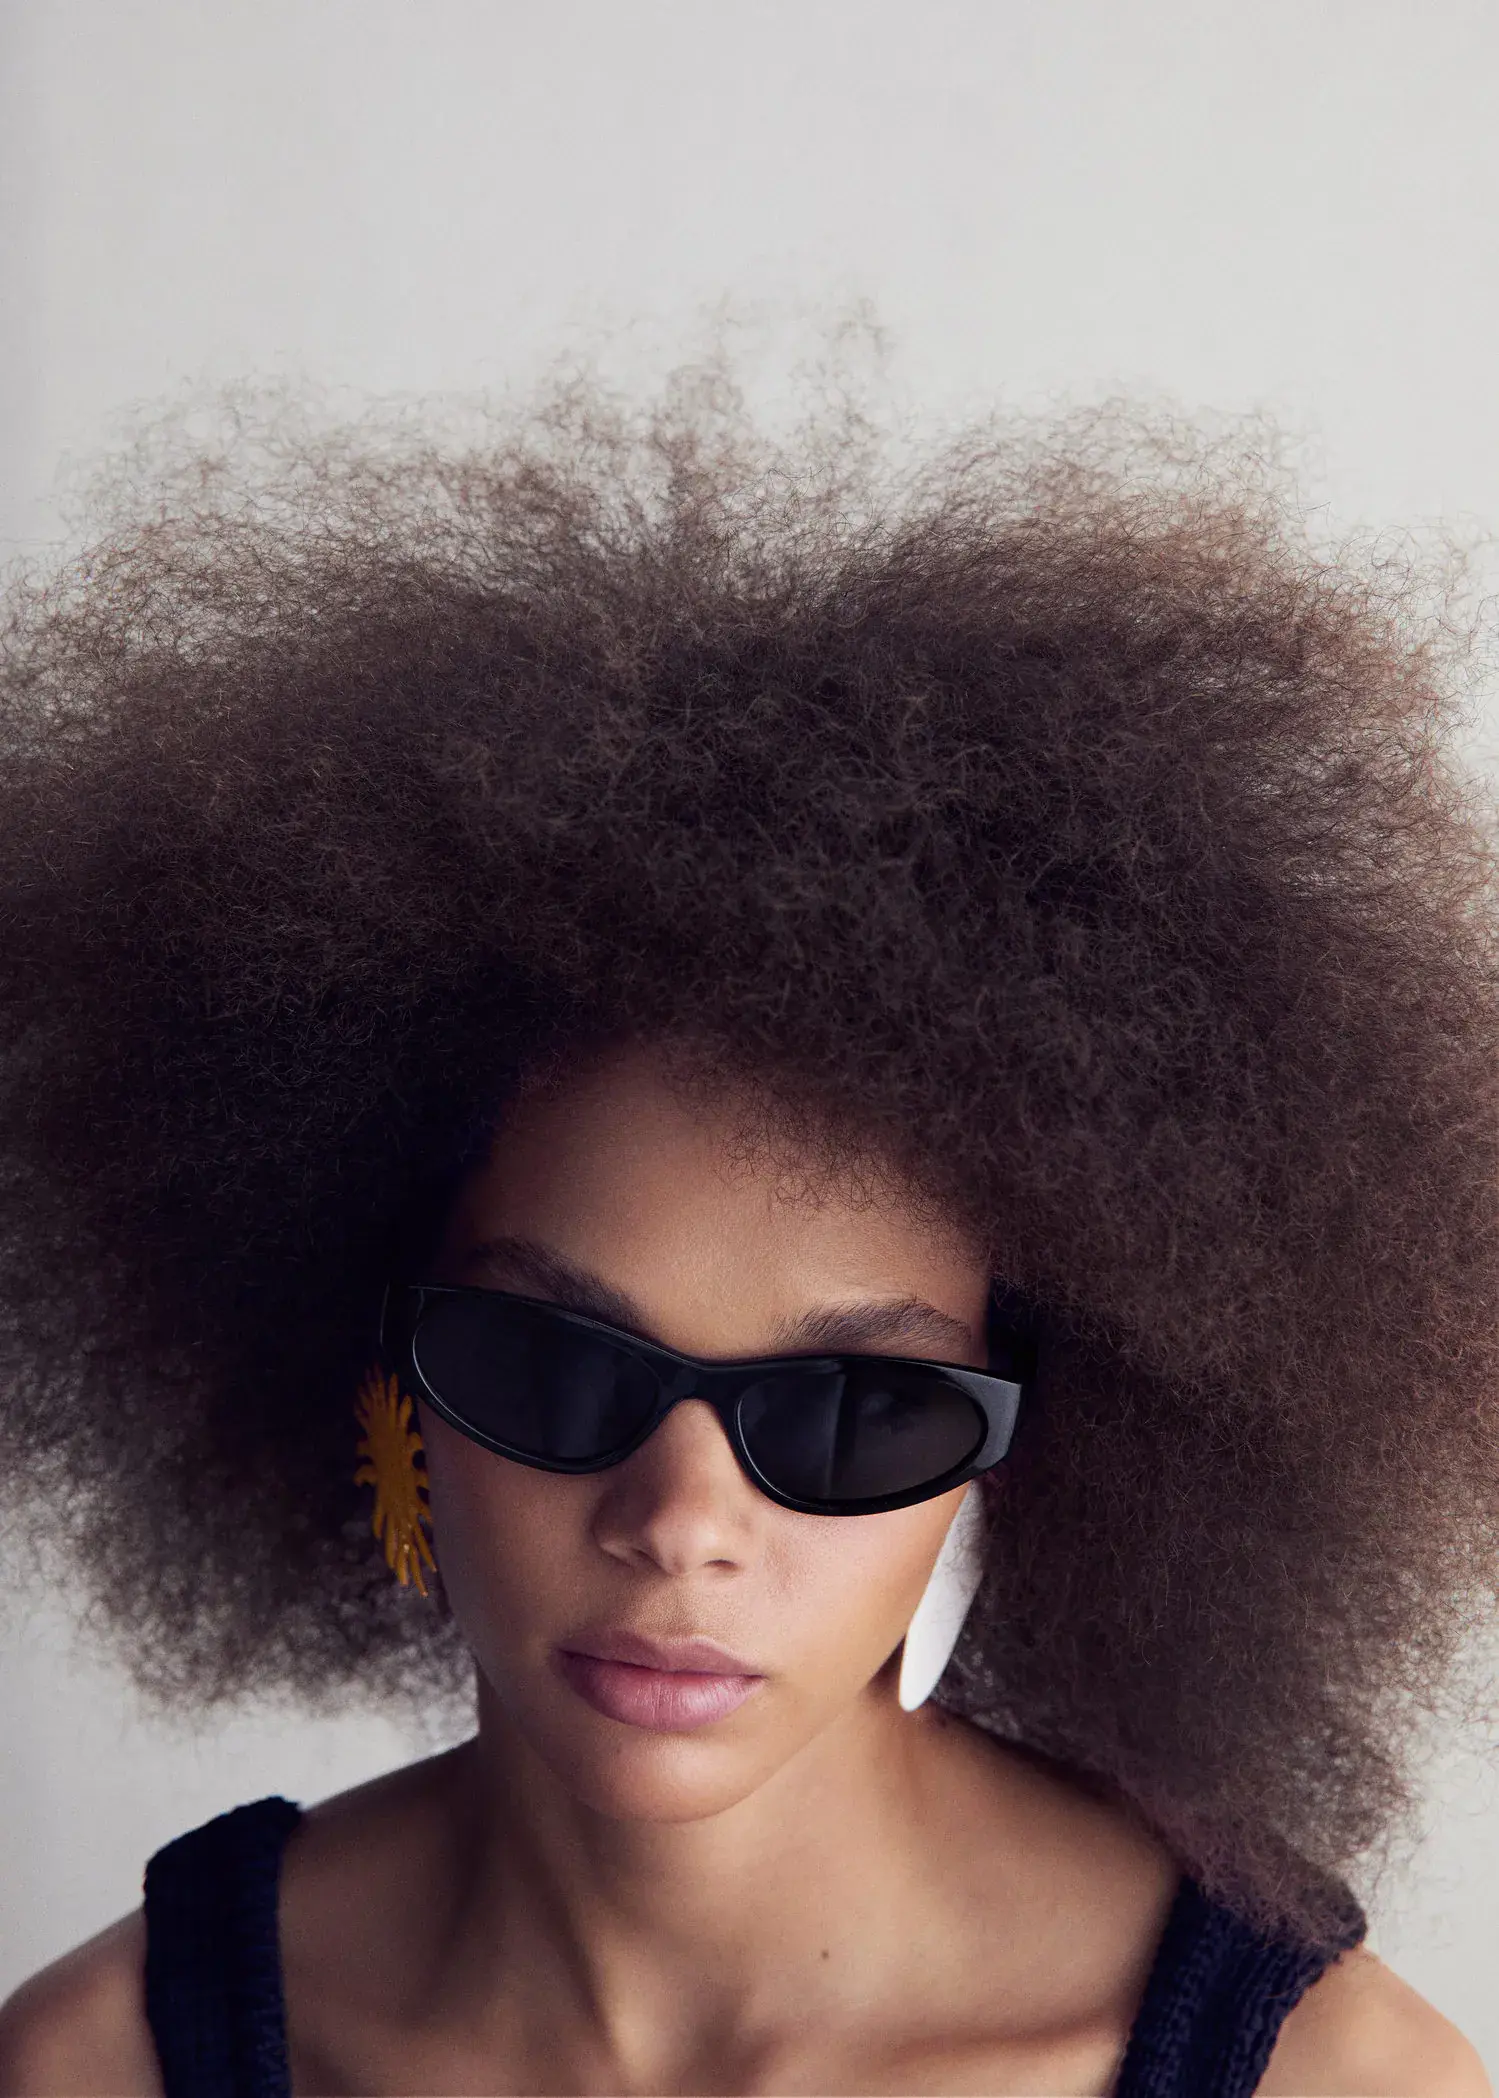 Mango Retro style sunglasses. a close up of a person wearing sunglasses 